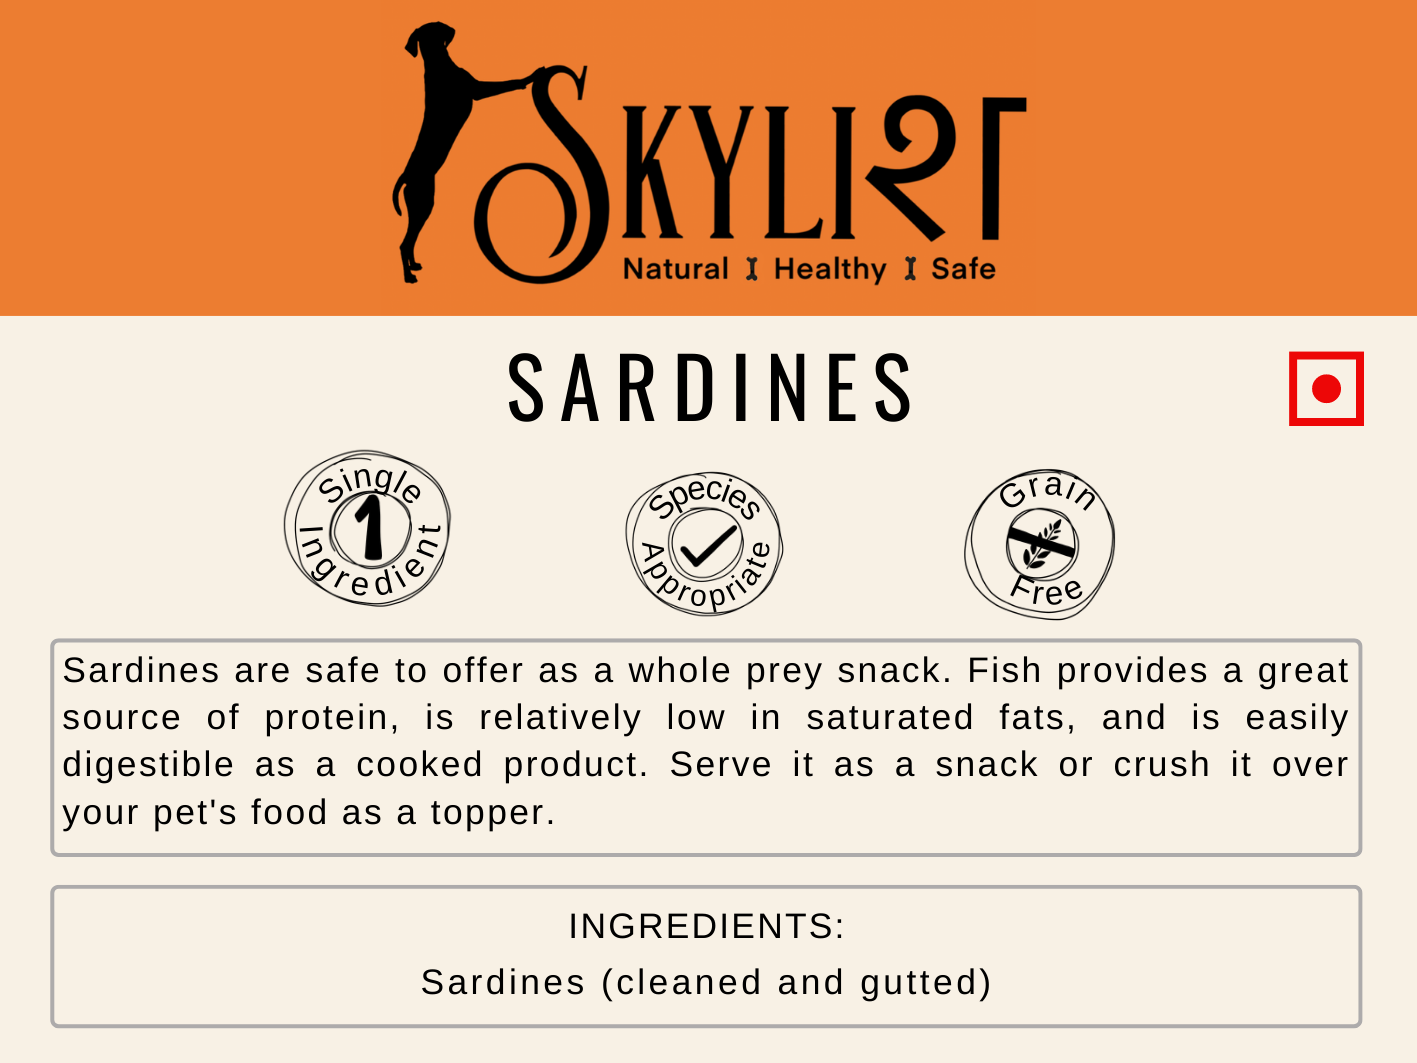 Skylish Sardines